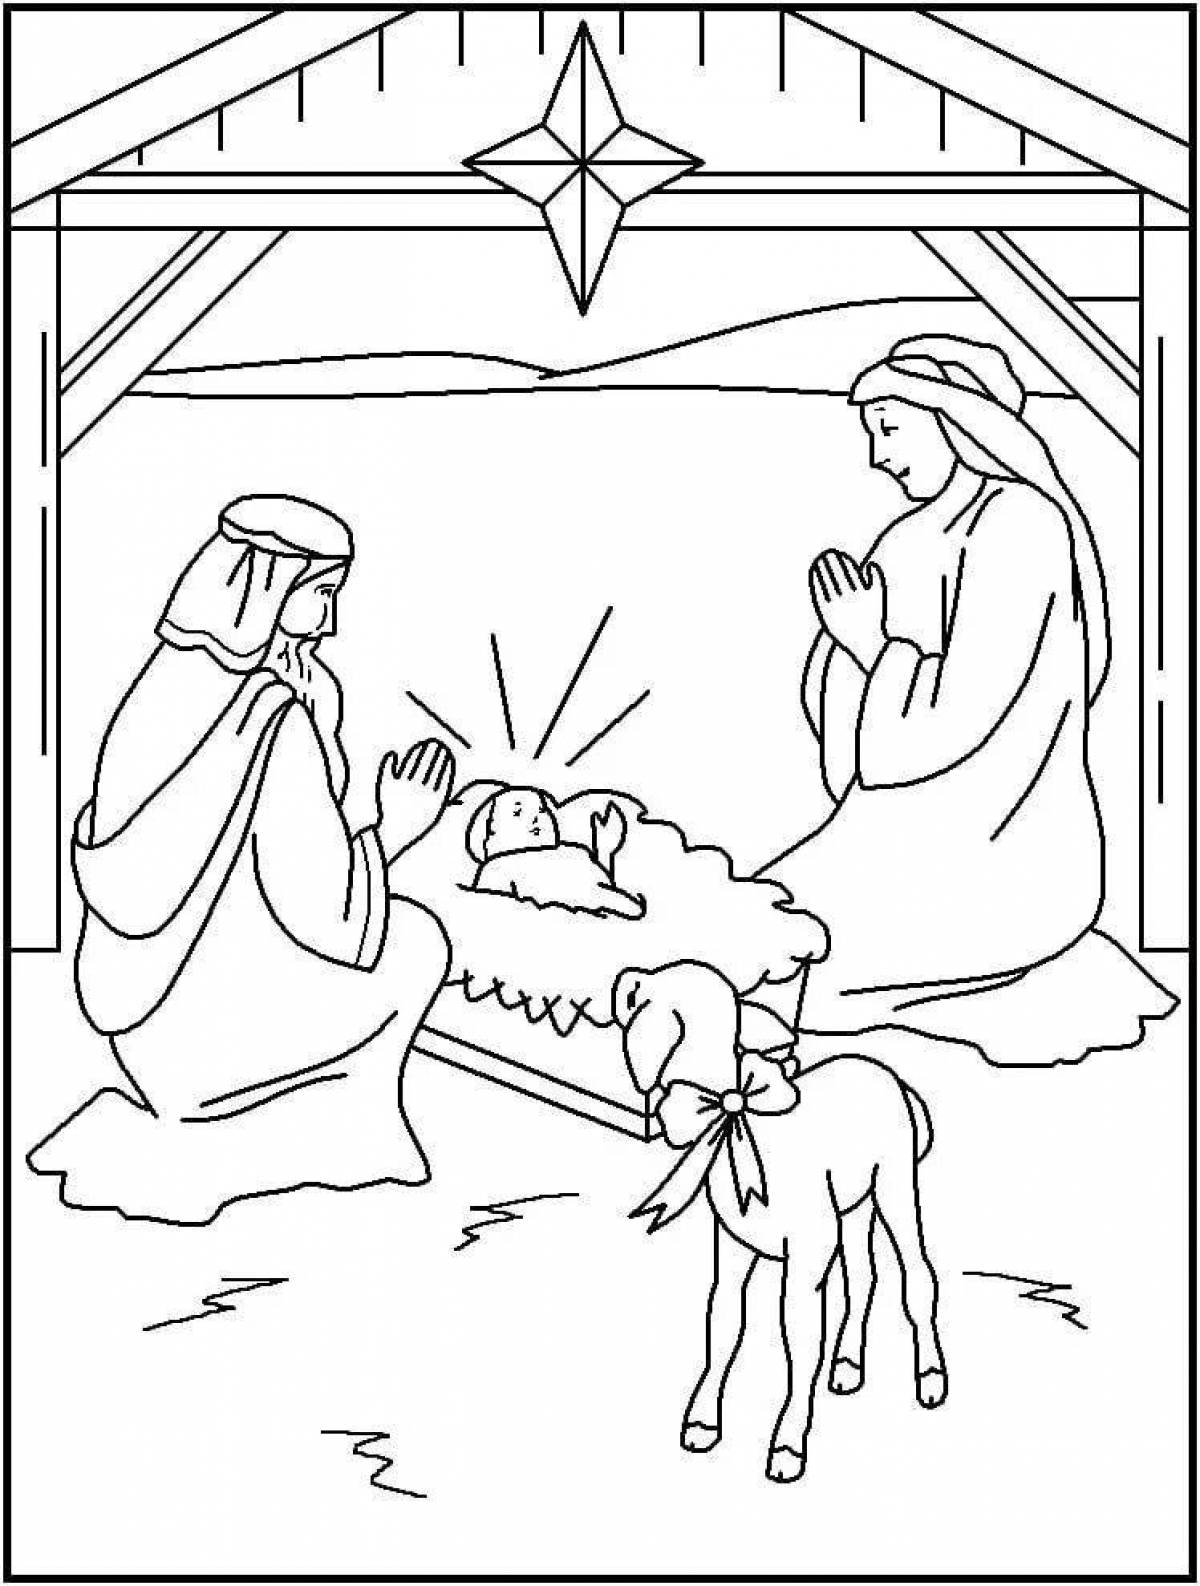 Majestic nativity scene coloring book for kids